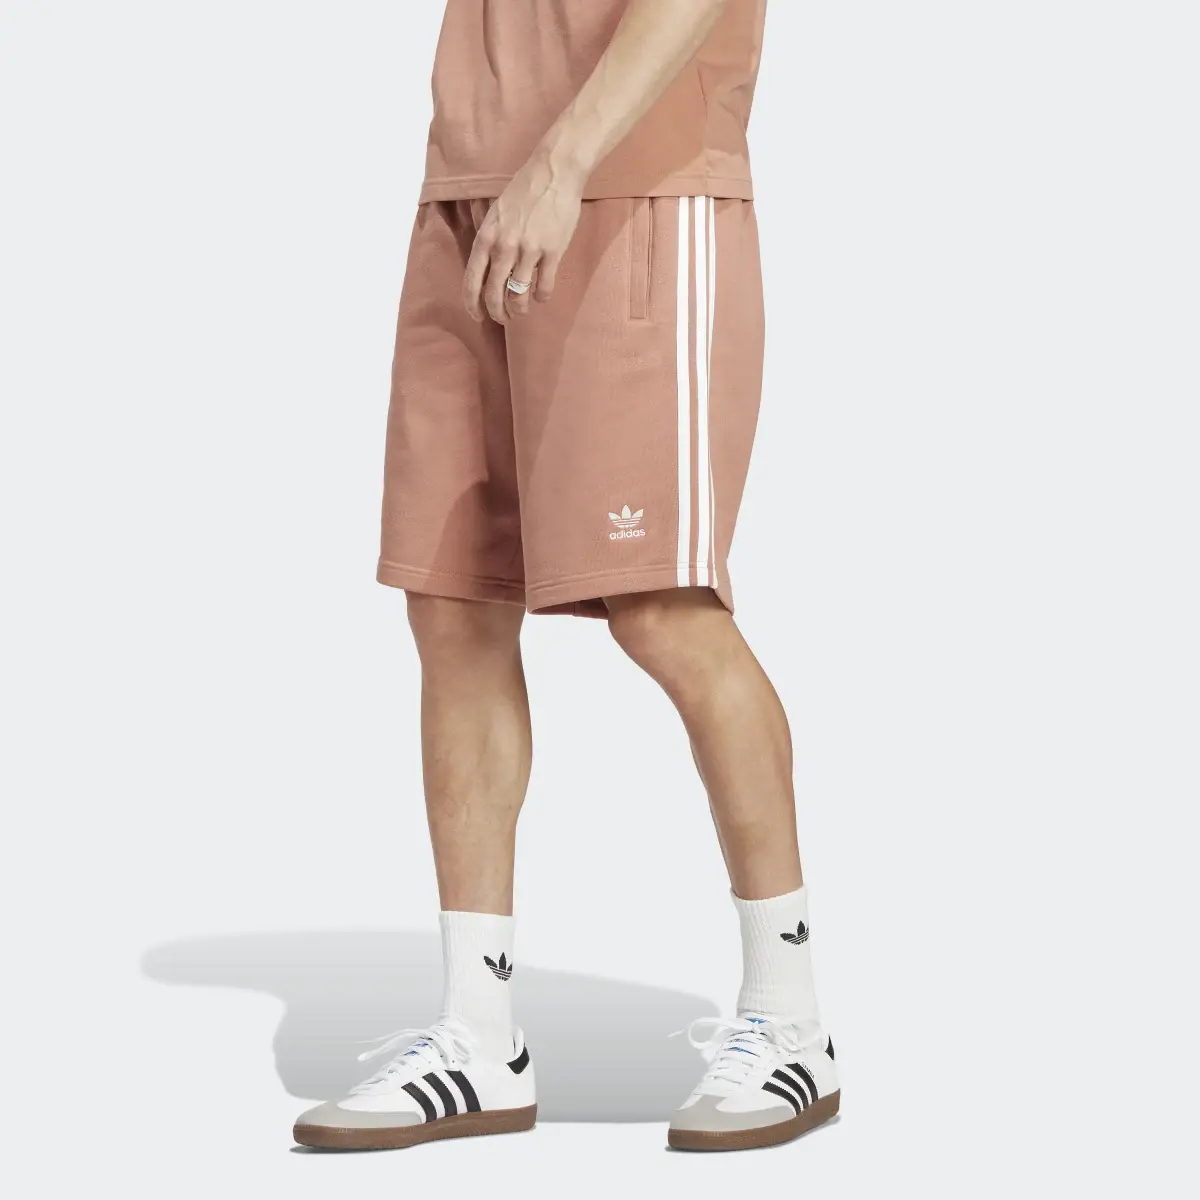 Adidas Short adicolor Classics 3-Stripes. 1